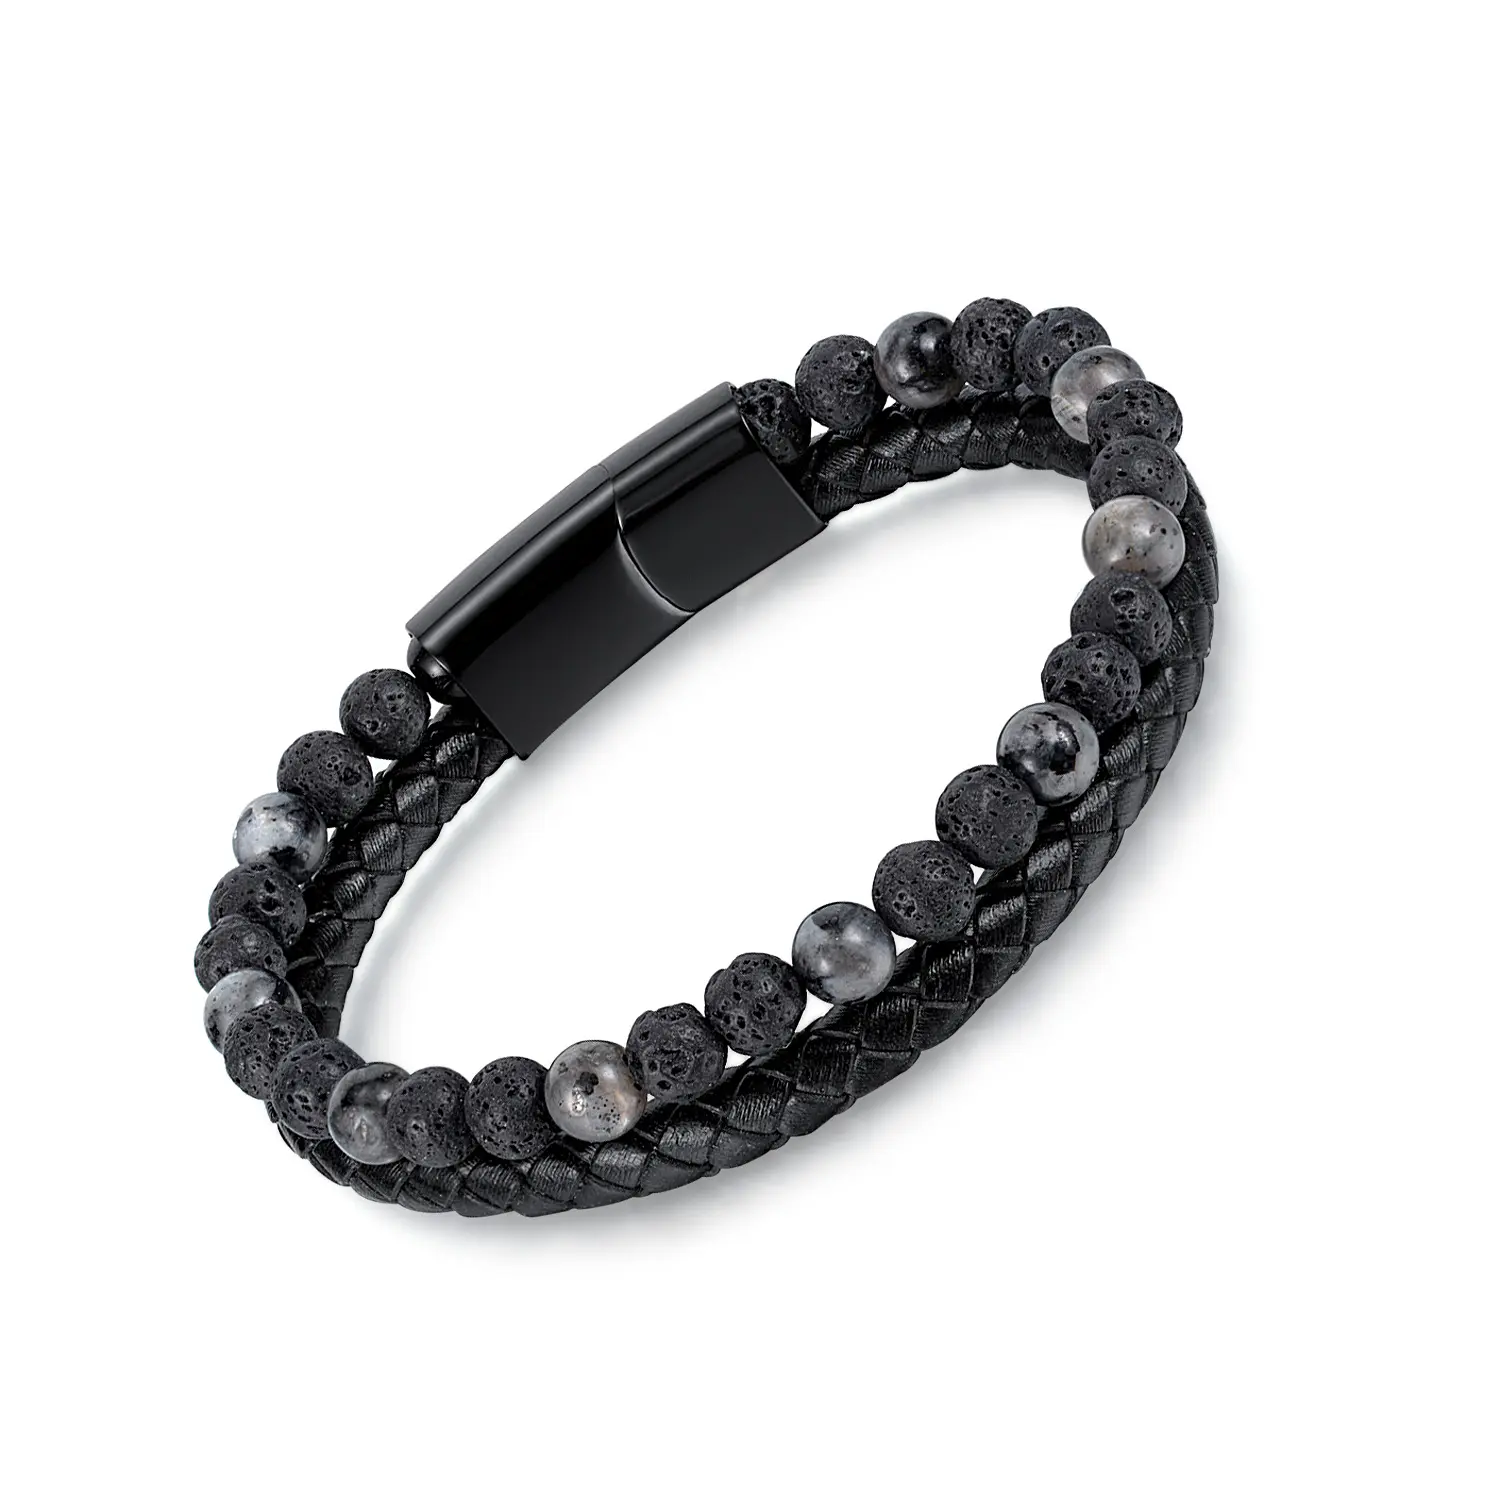 Wholesale men leather bracelets personality fashion volcanic stone beads charm men's leather bracelet